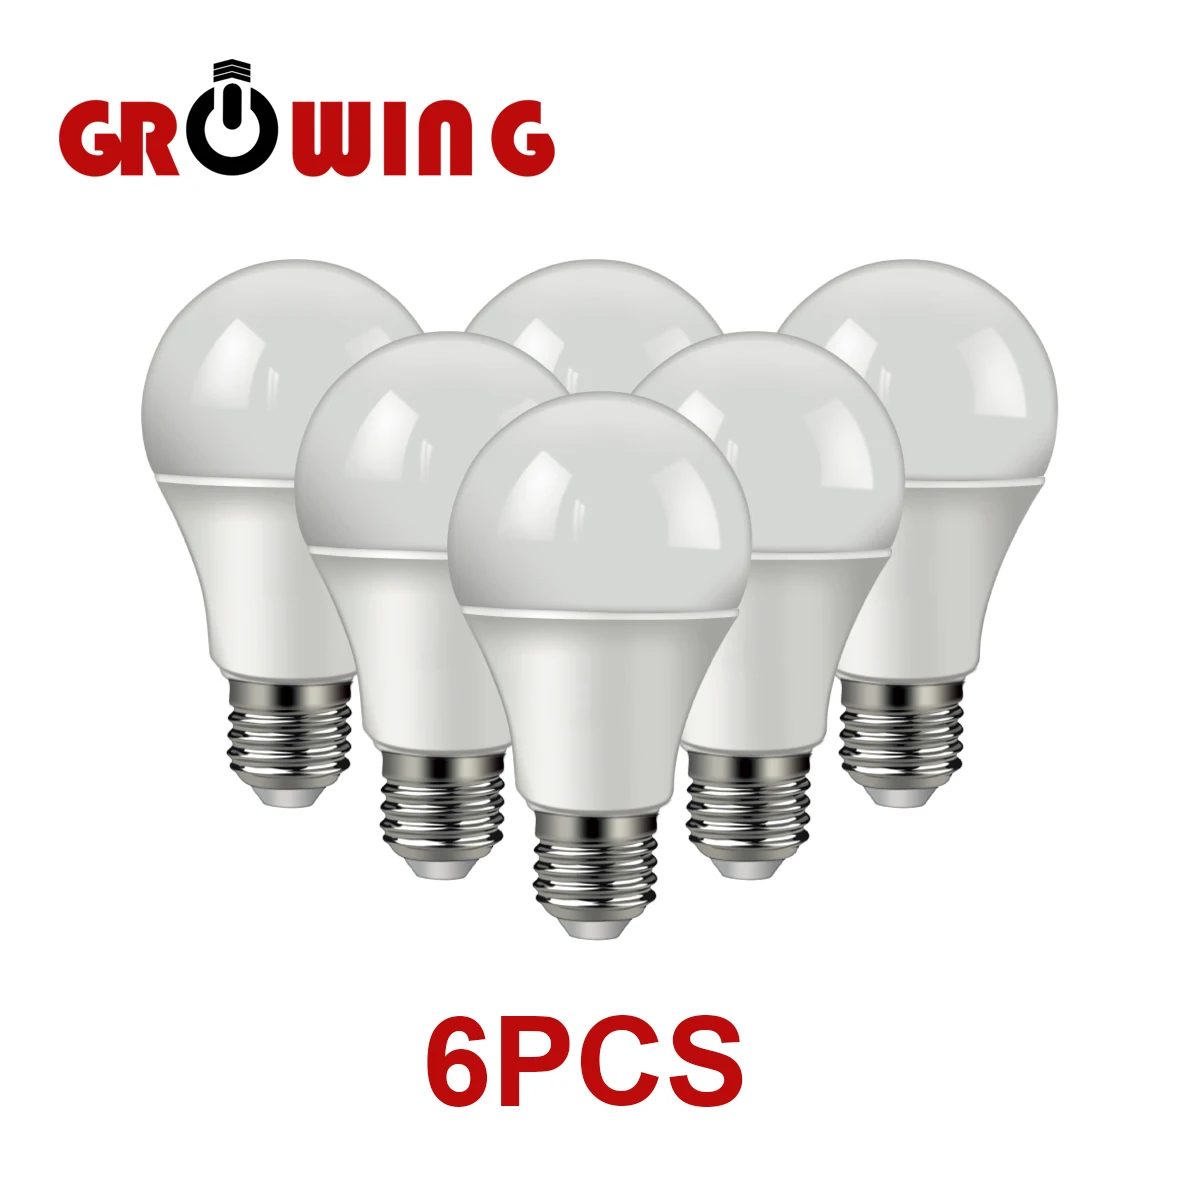 

6PCS LED Bulb Light E27 B22 10W Real Power Light Bulbs AC 220V 230V 240V 3000K 4000K 6500K Spotlight Lampada LED Bombillas Lamp